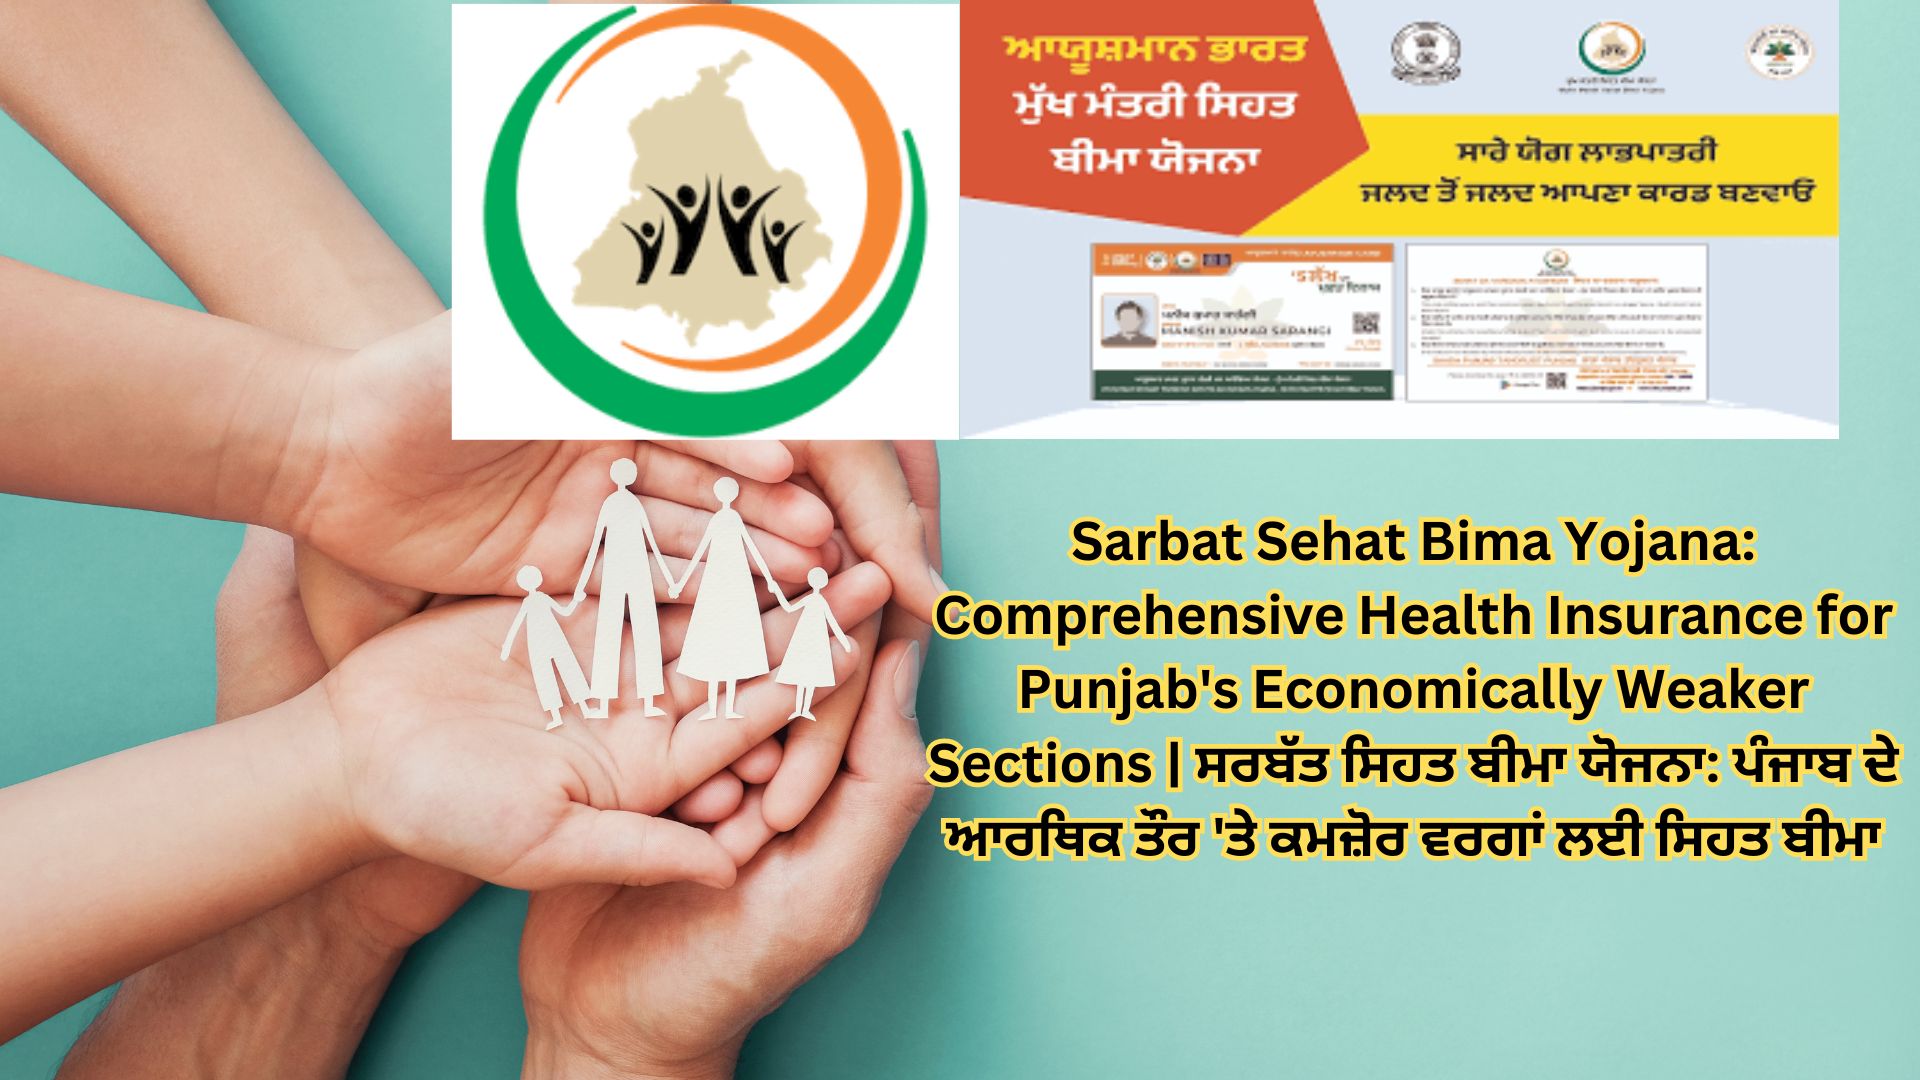 Sarbat Sehat Bima Yojana: Comprehensive Health Insurance for Punjab's Economically Weaker Sections | ਸਰਬੱਤ ਸਿਹਤ ਬੀਮਾ ਯੋਜਨਾ: ਪੰਜਾਬ ਦੇ ਆਰਥਿਕ ਤੌਰ 'ਤੇ ਕਮਜ਼ੋਰ ਵਰਗਾਂ ਲਈ ਸਿਹਤ ਬੀਮਾ